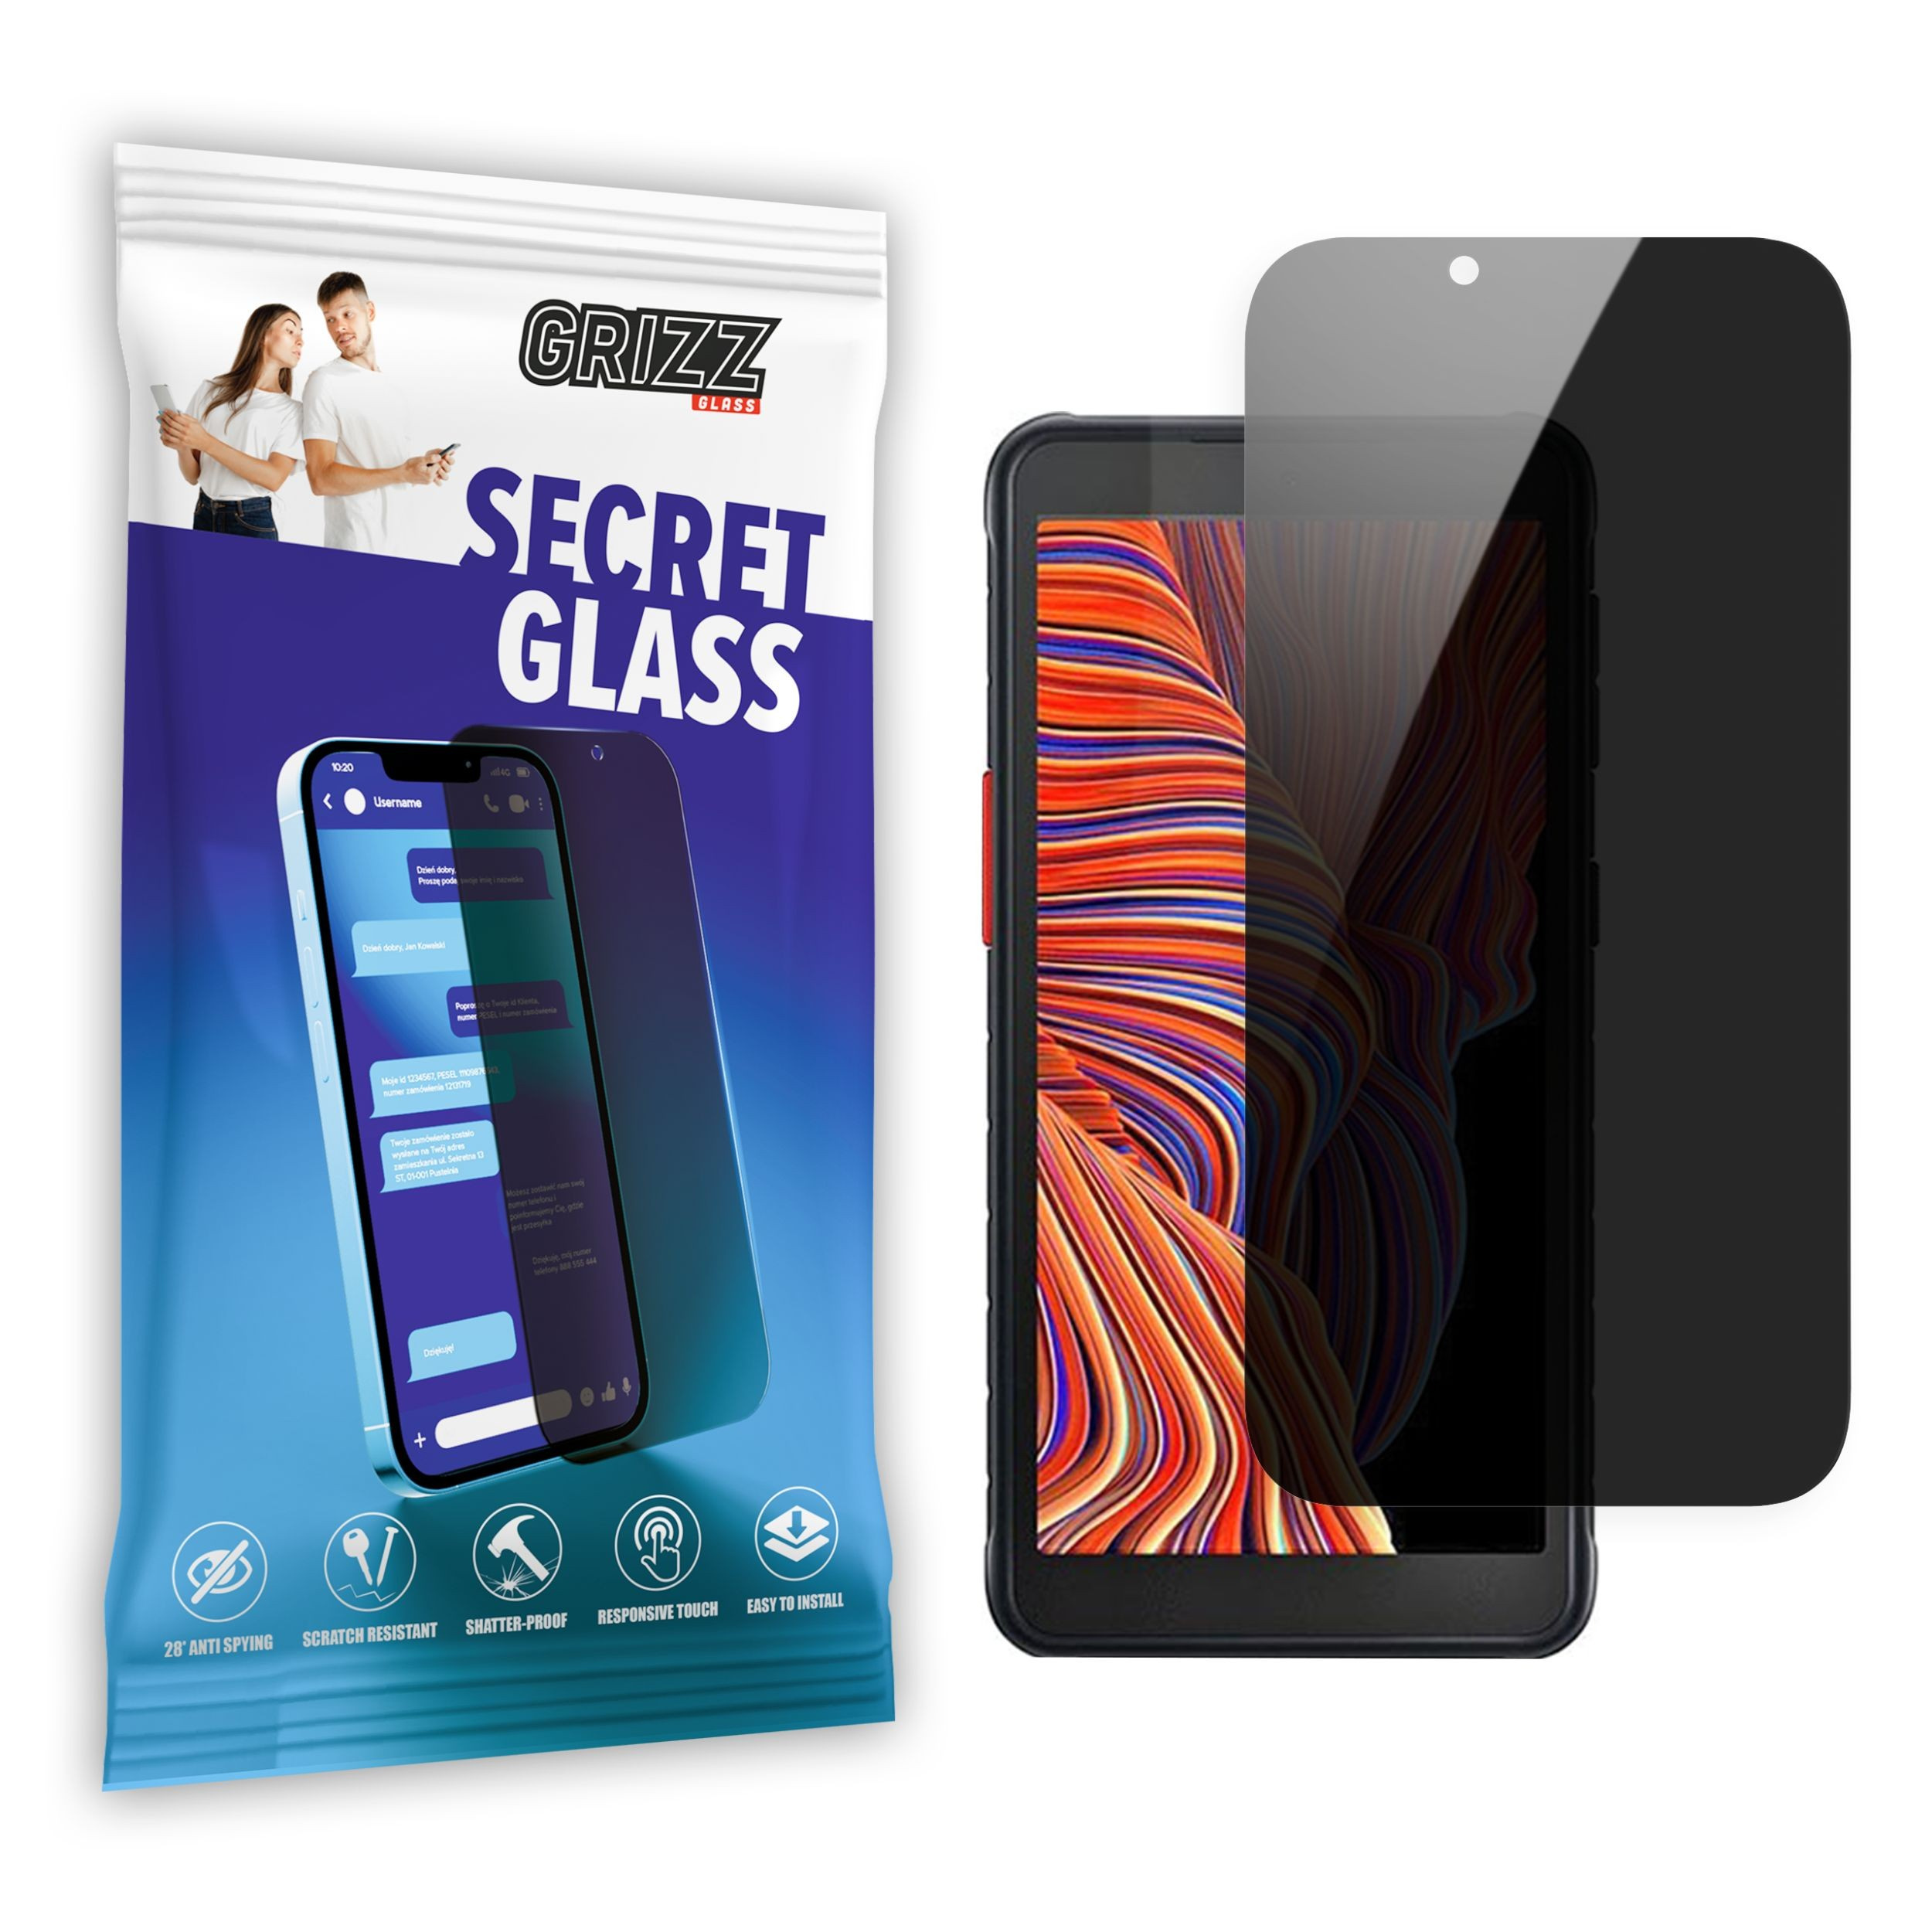 GrizzGlass SecretGlass Samsung Galaxy Xcover 4s